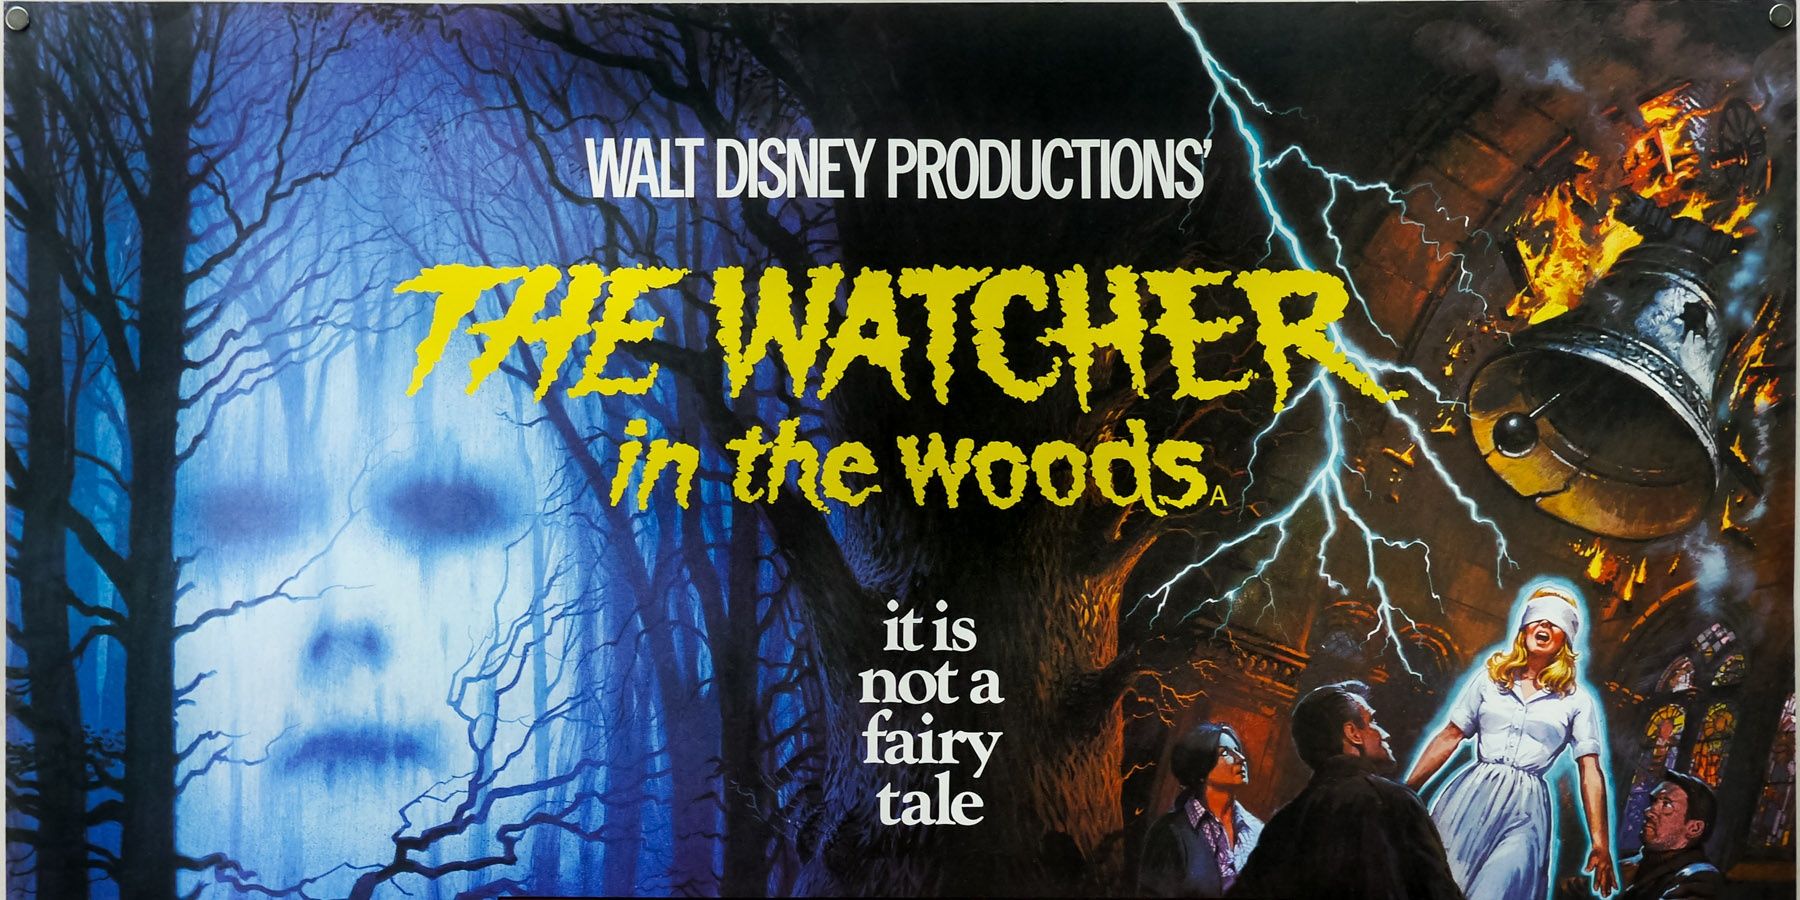 The Watcher in the Woods Is a Generation's Halloween Nightmare